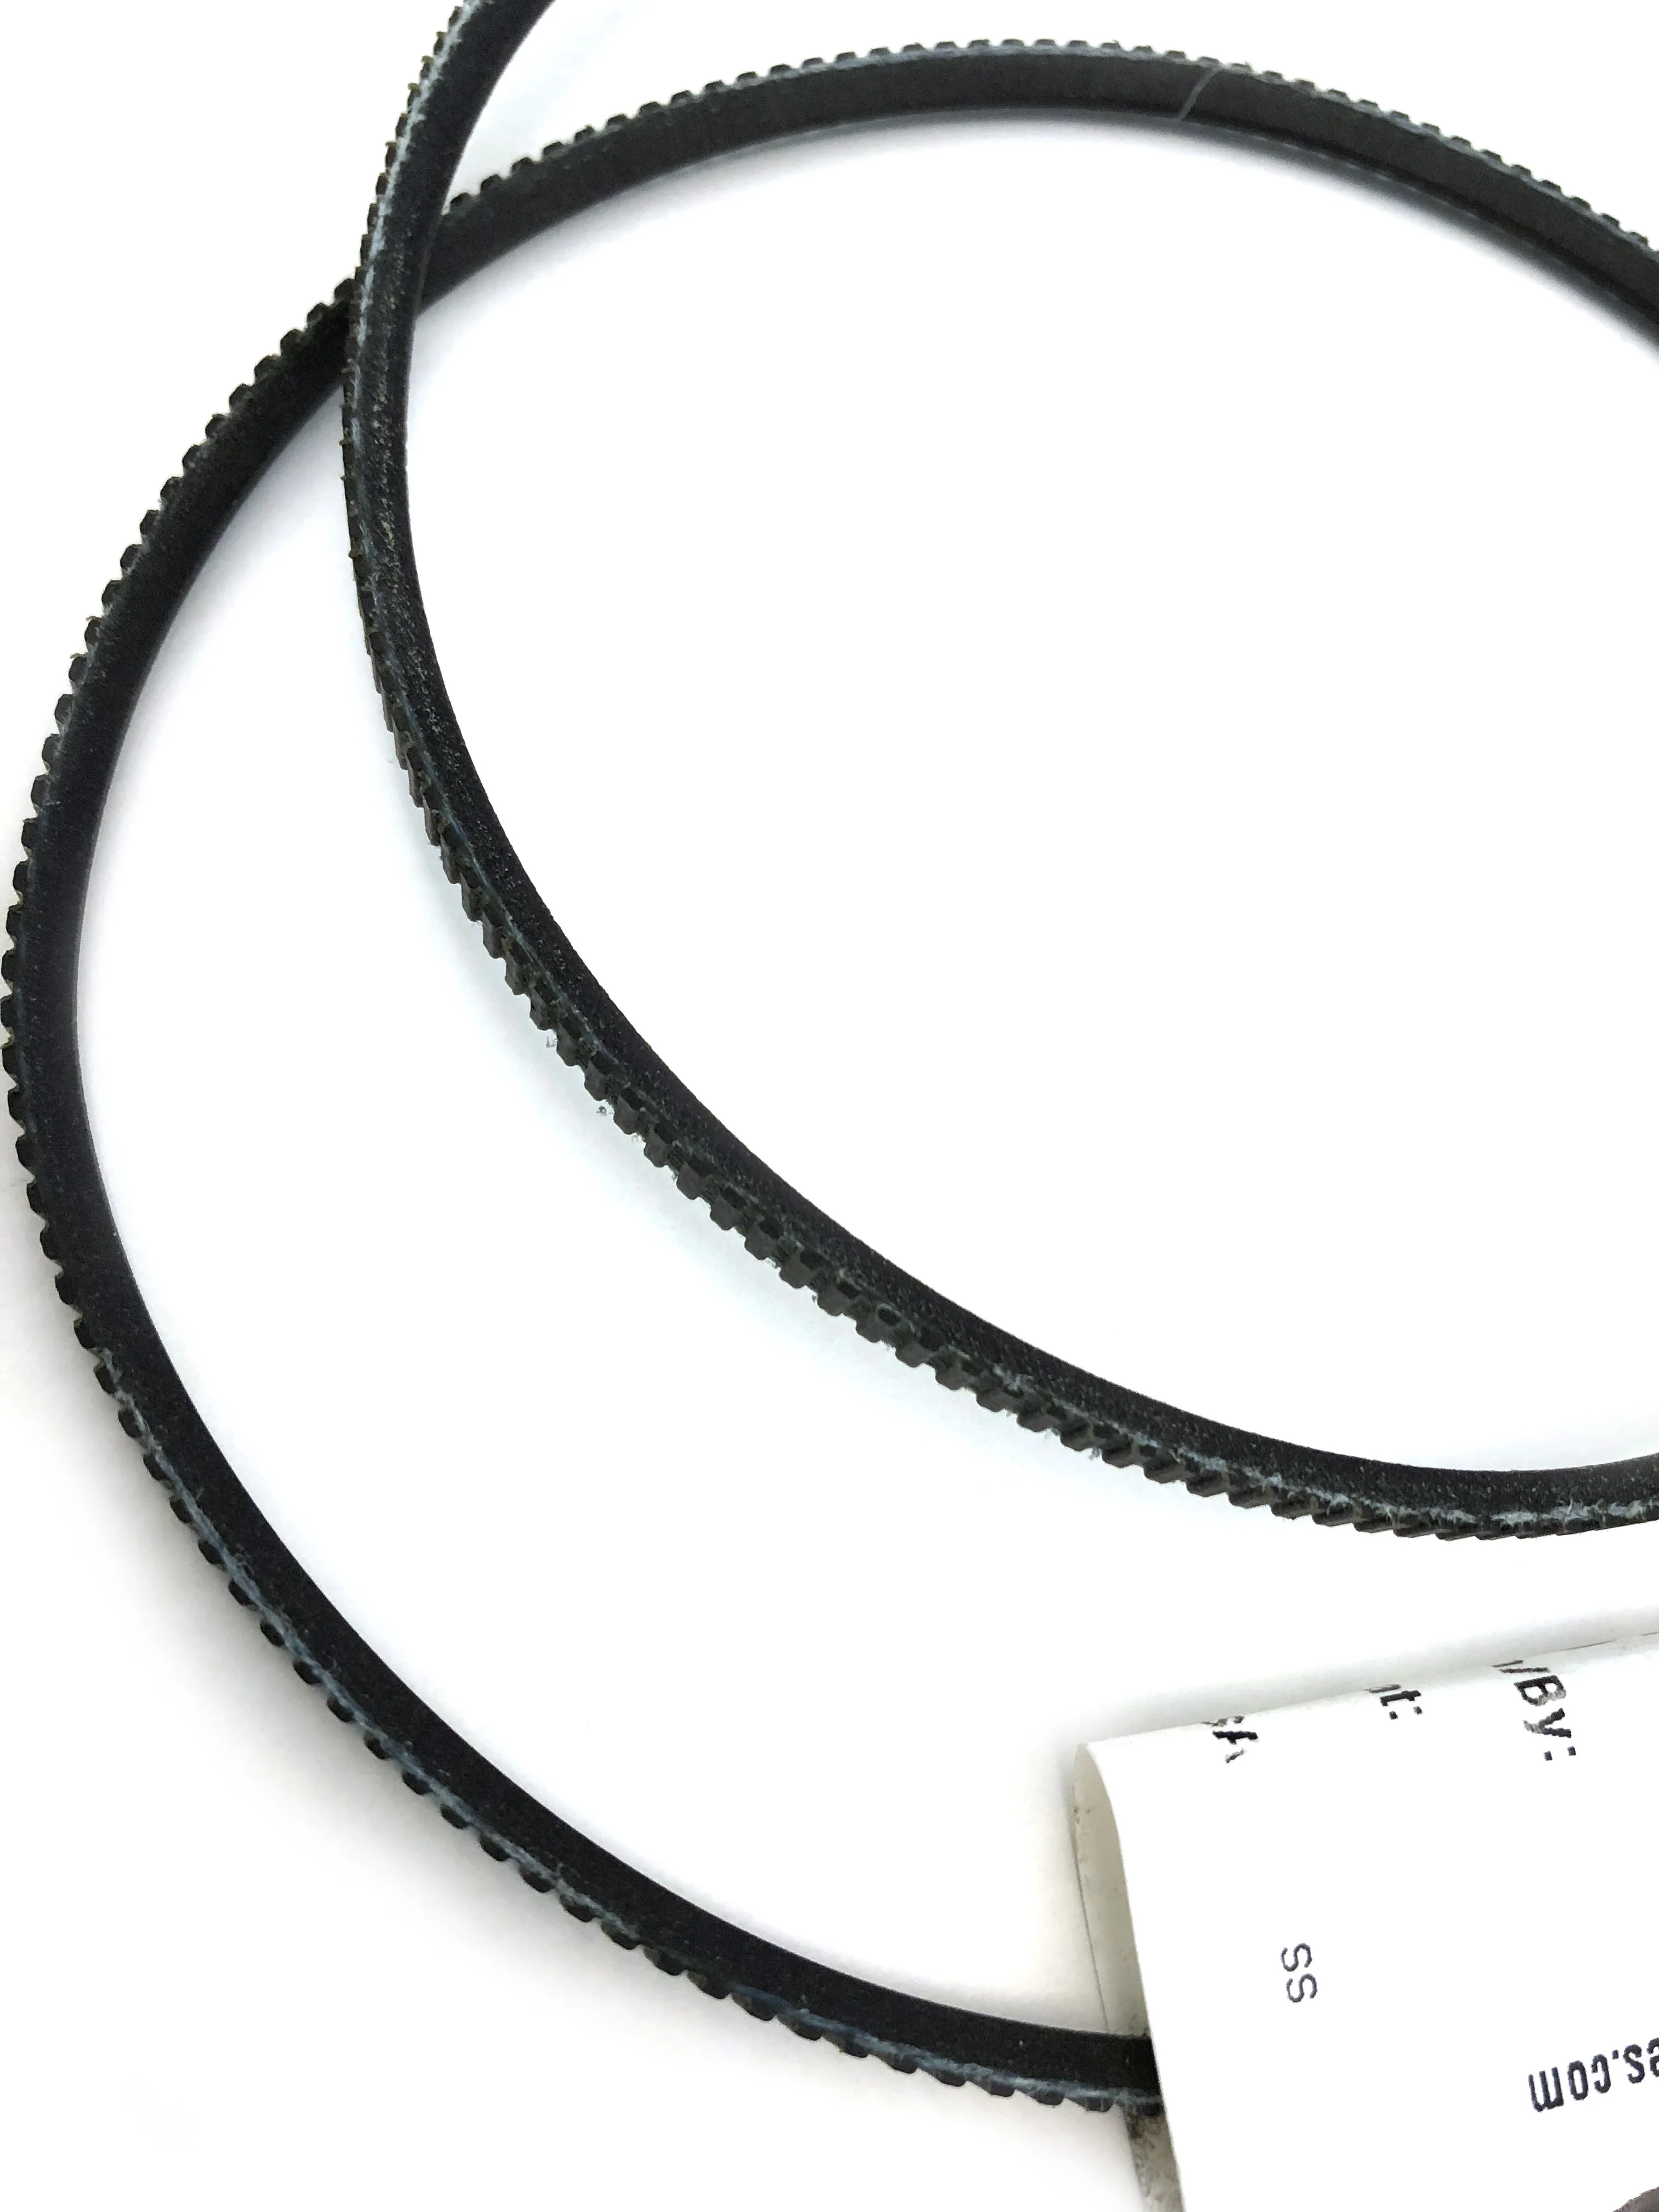 2PCS/lot 5M710  drive belts Gates Polyflex Belt for Optimum D 180 machine Free shipping